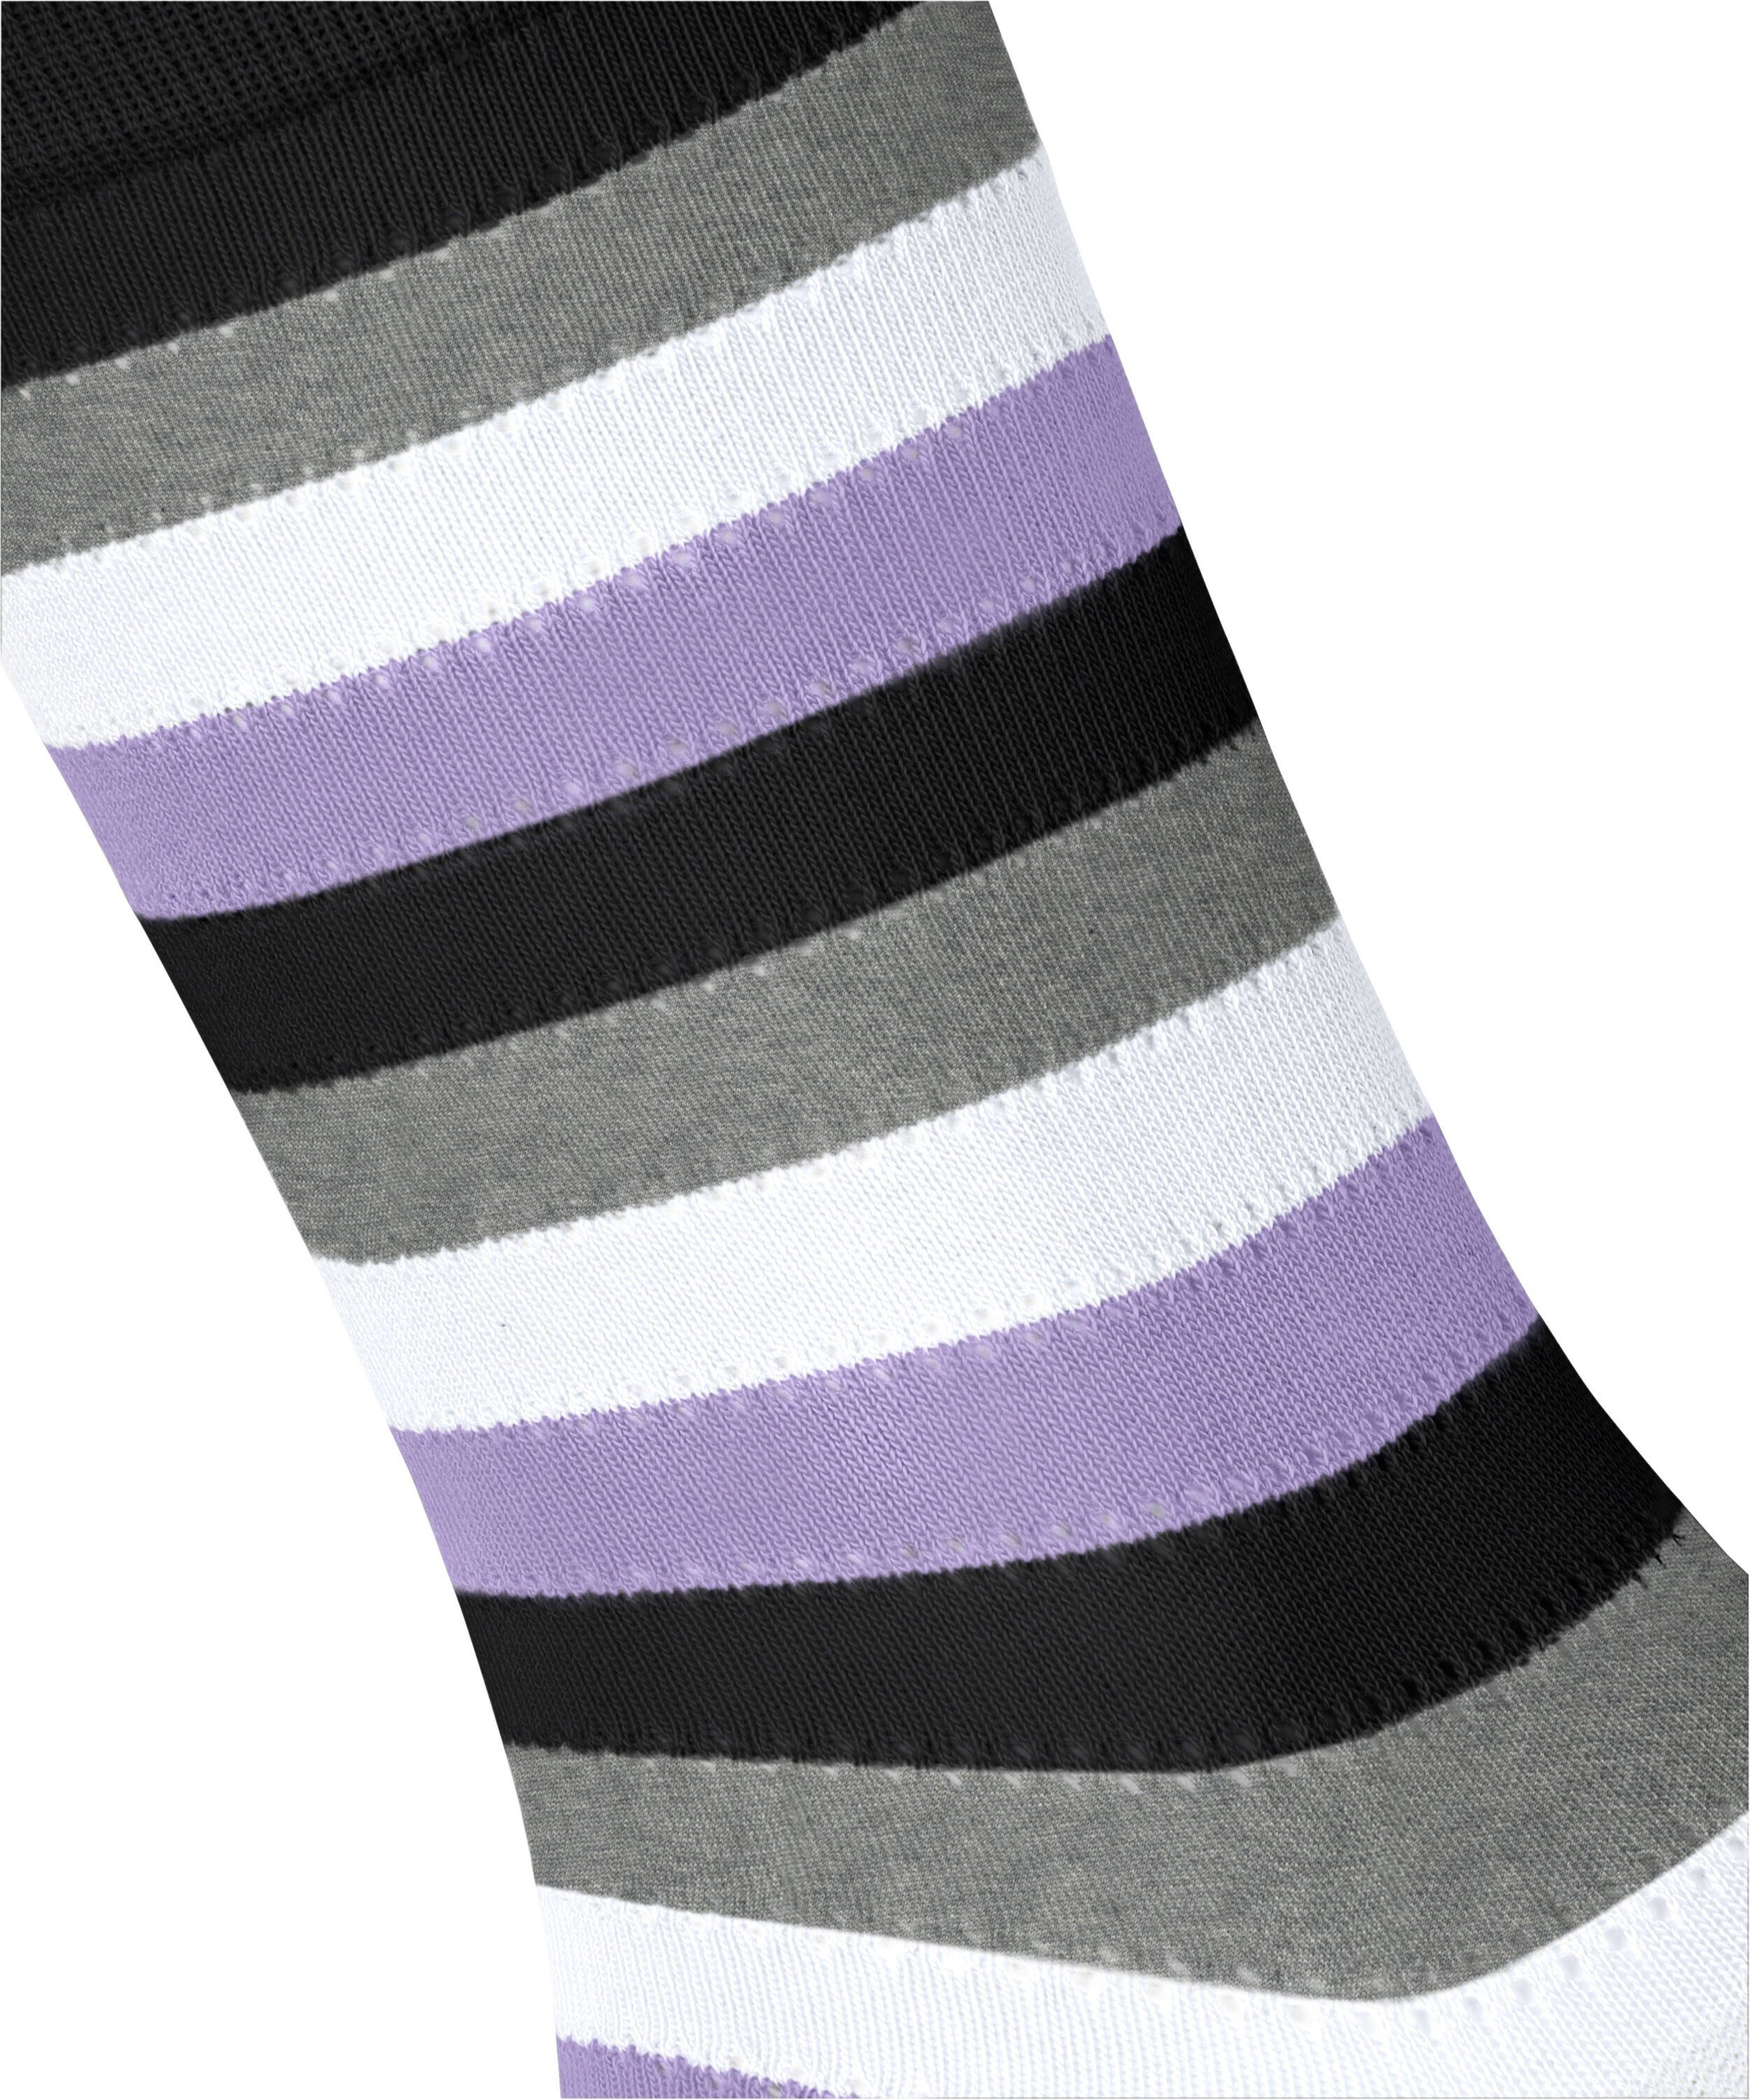 Burlington Socken black (3000) (1-Paar) Preppy Stripe